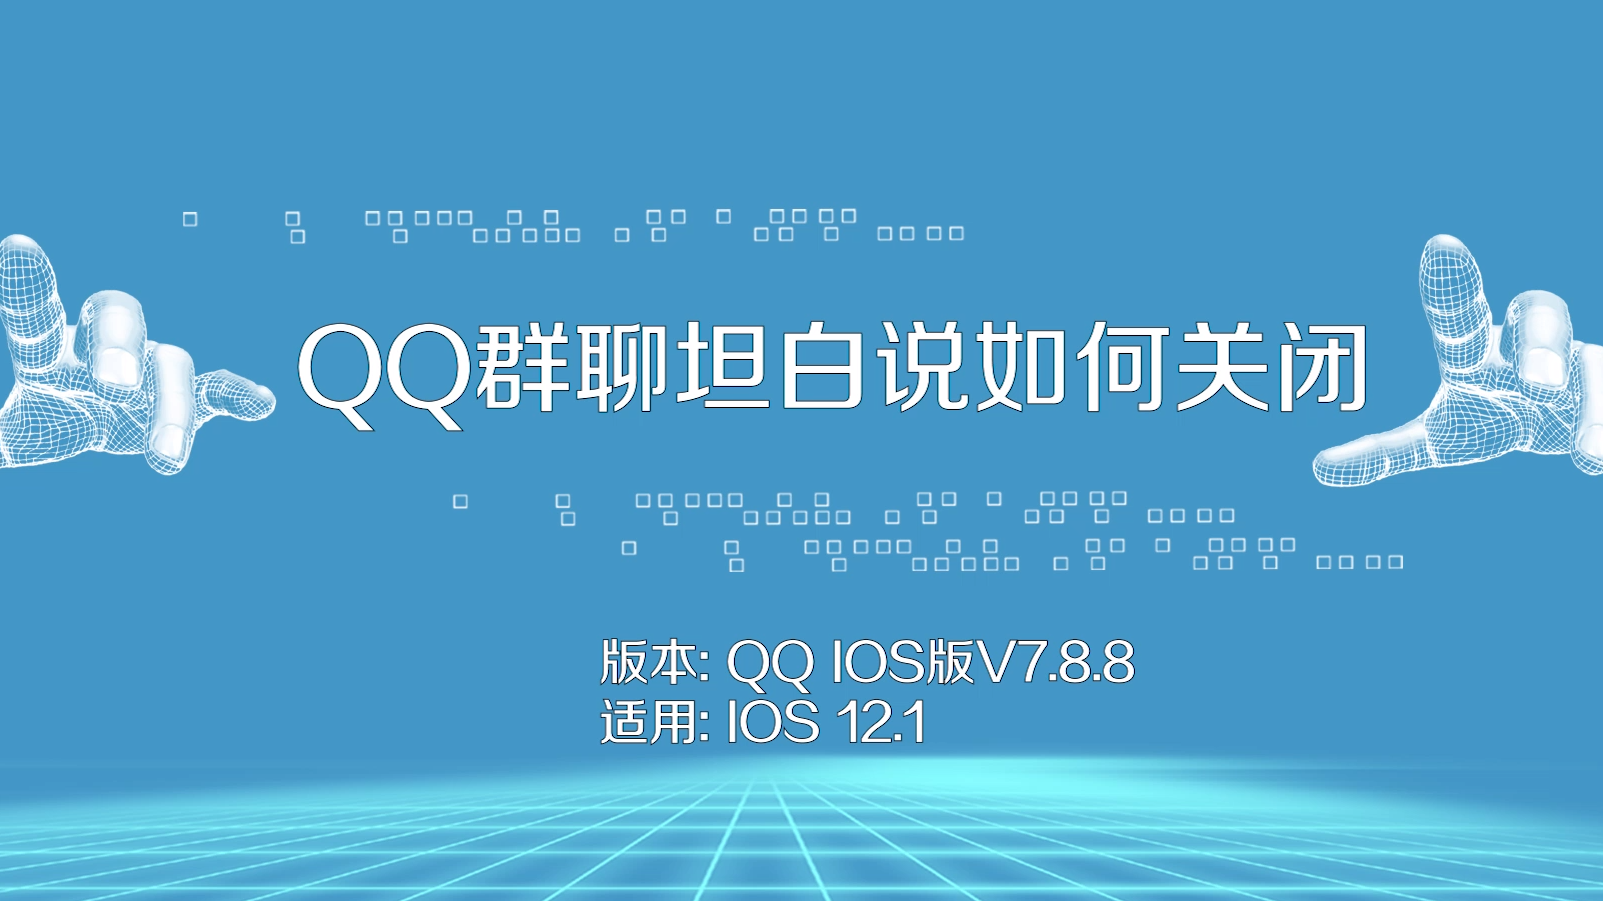 QQ图标设计图__LOGO设计_广告设计_设计图库_昵图网nipic.com